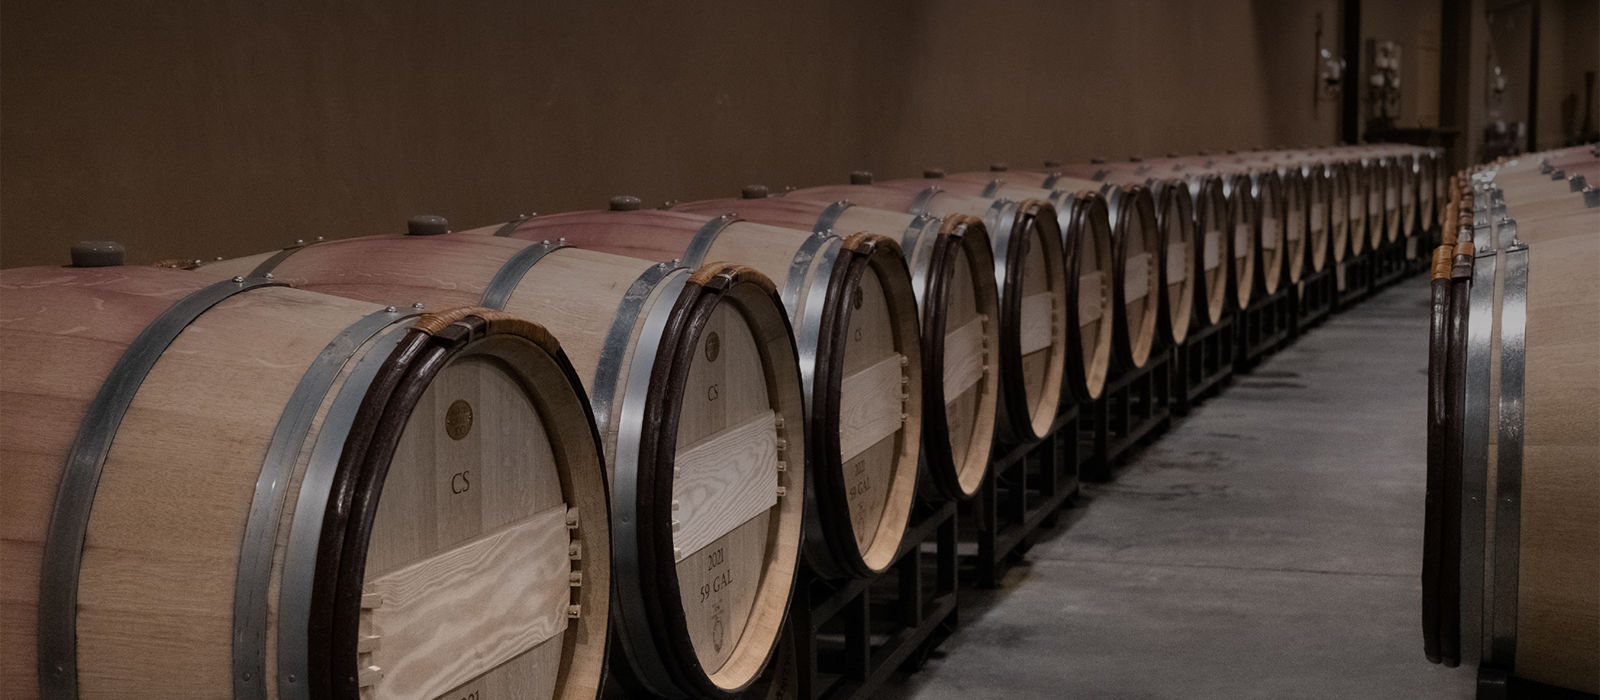 Wine barrels lined up